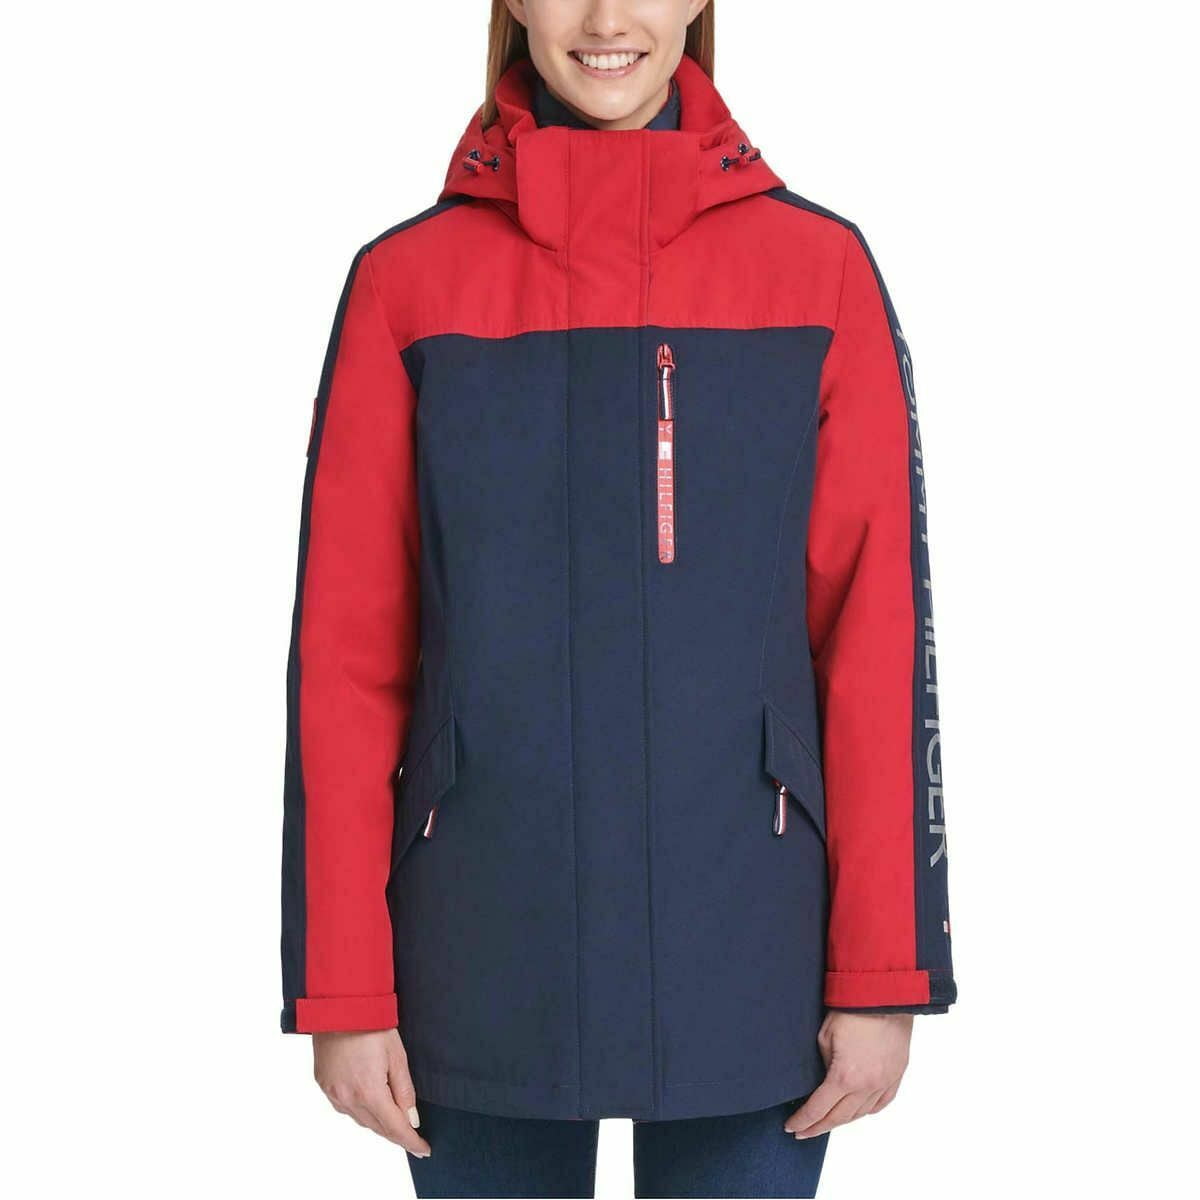 Hilfiger Women's in 1 Triclimate Weather Basic Coat, Crimson/Navy, Large - Walmart.com